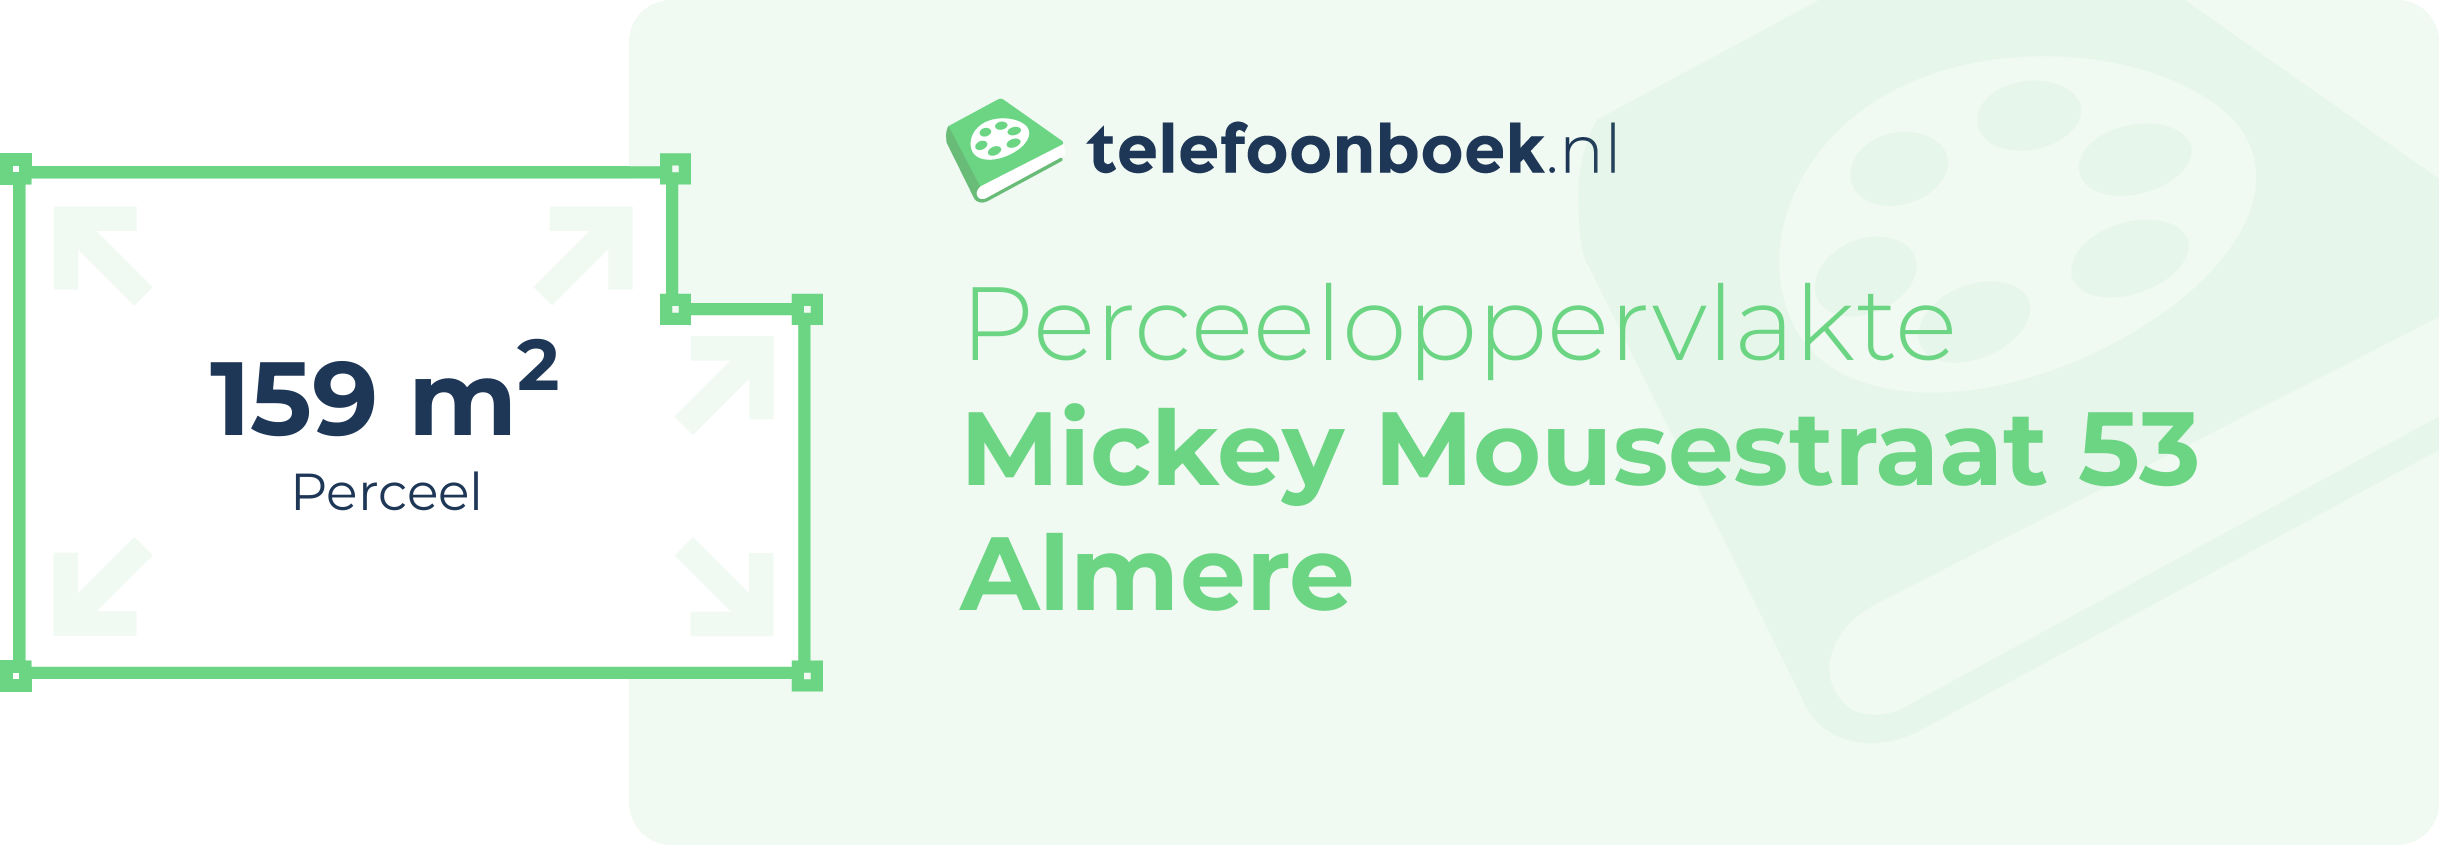 Perceeloppervlakte Mickey Mousestraat 53 Almere